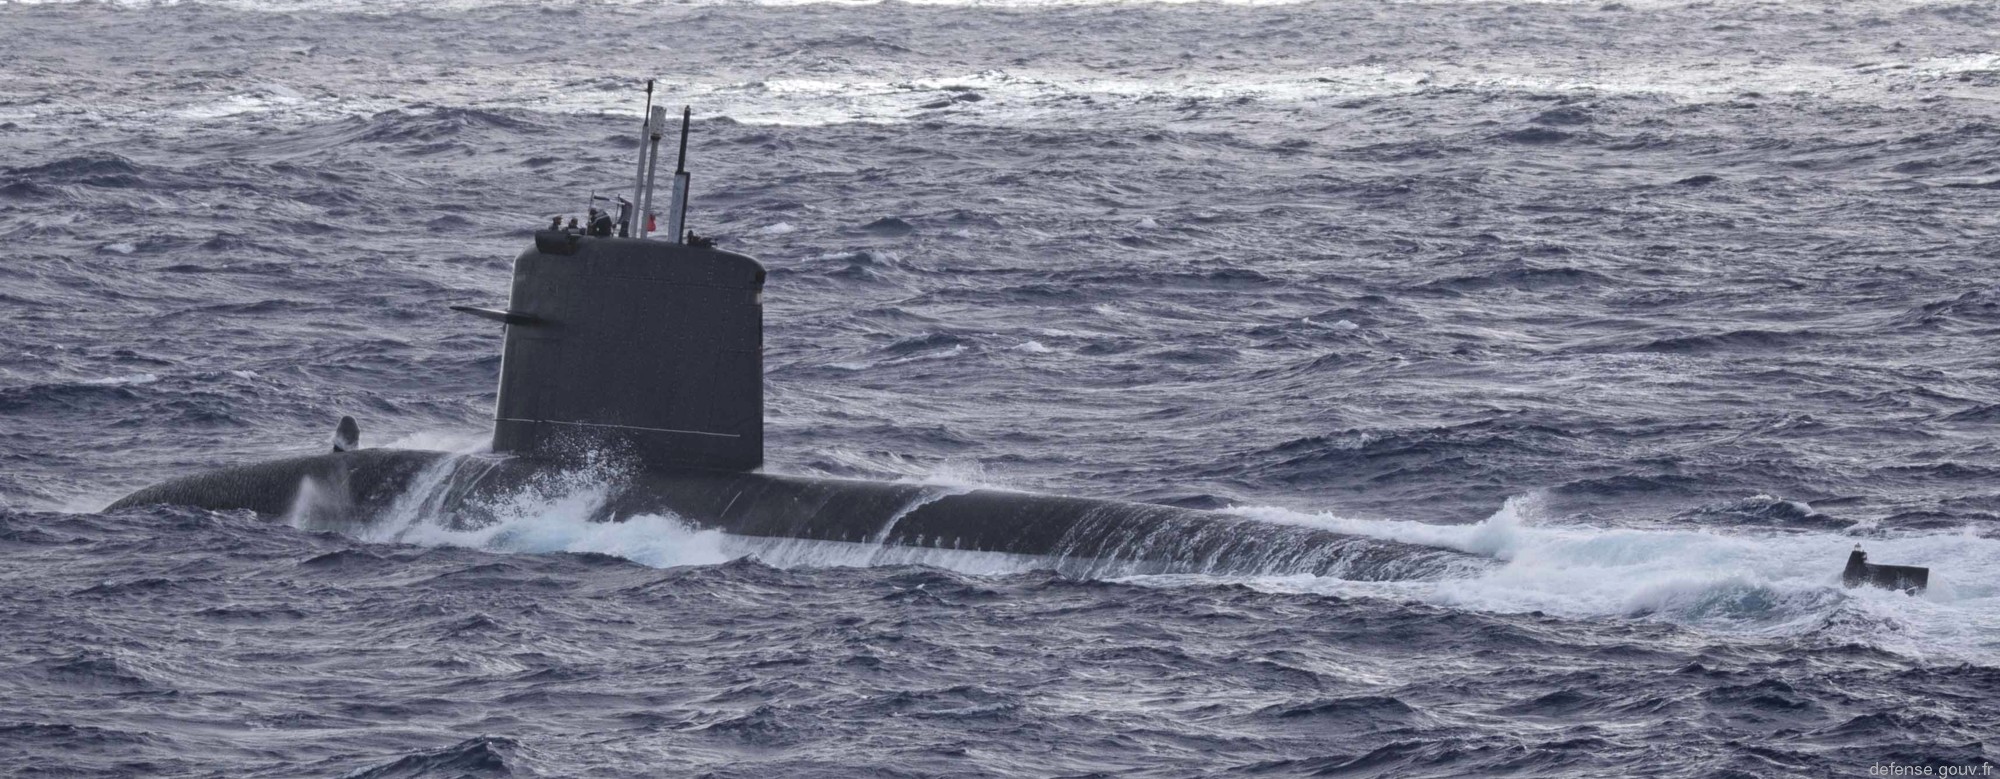 s-604 emeraude rubis class attack submarine ssn french navy marine nationale sna 02